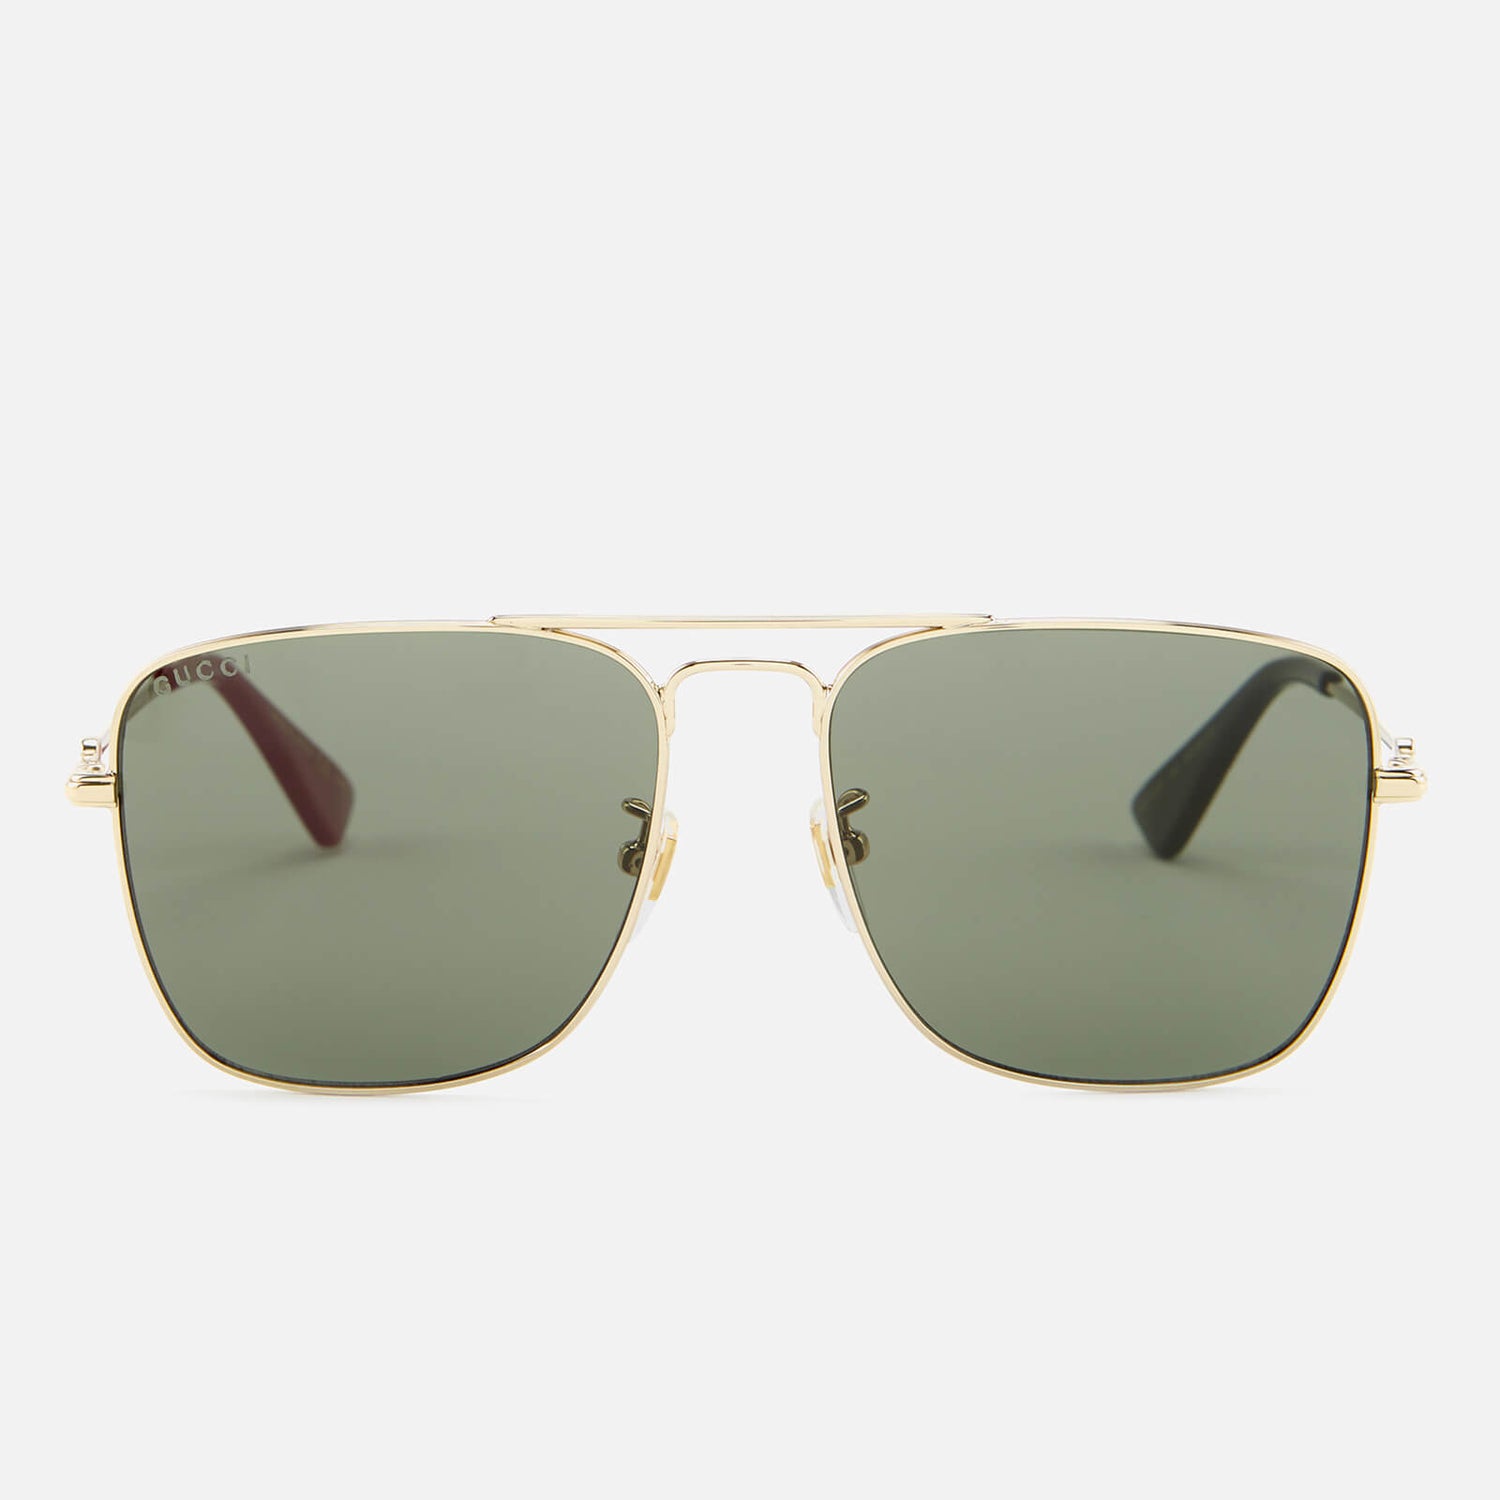 Gucci Men's Square Metal Frame Sunglasses - Gold/Green - Free UK ...